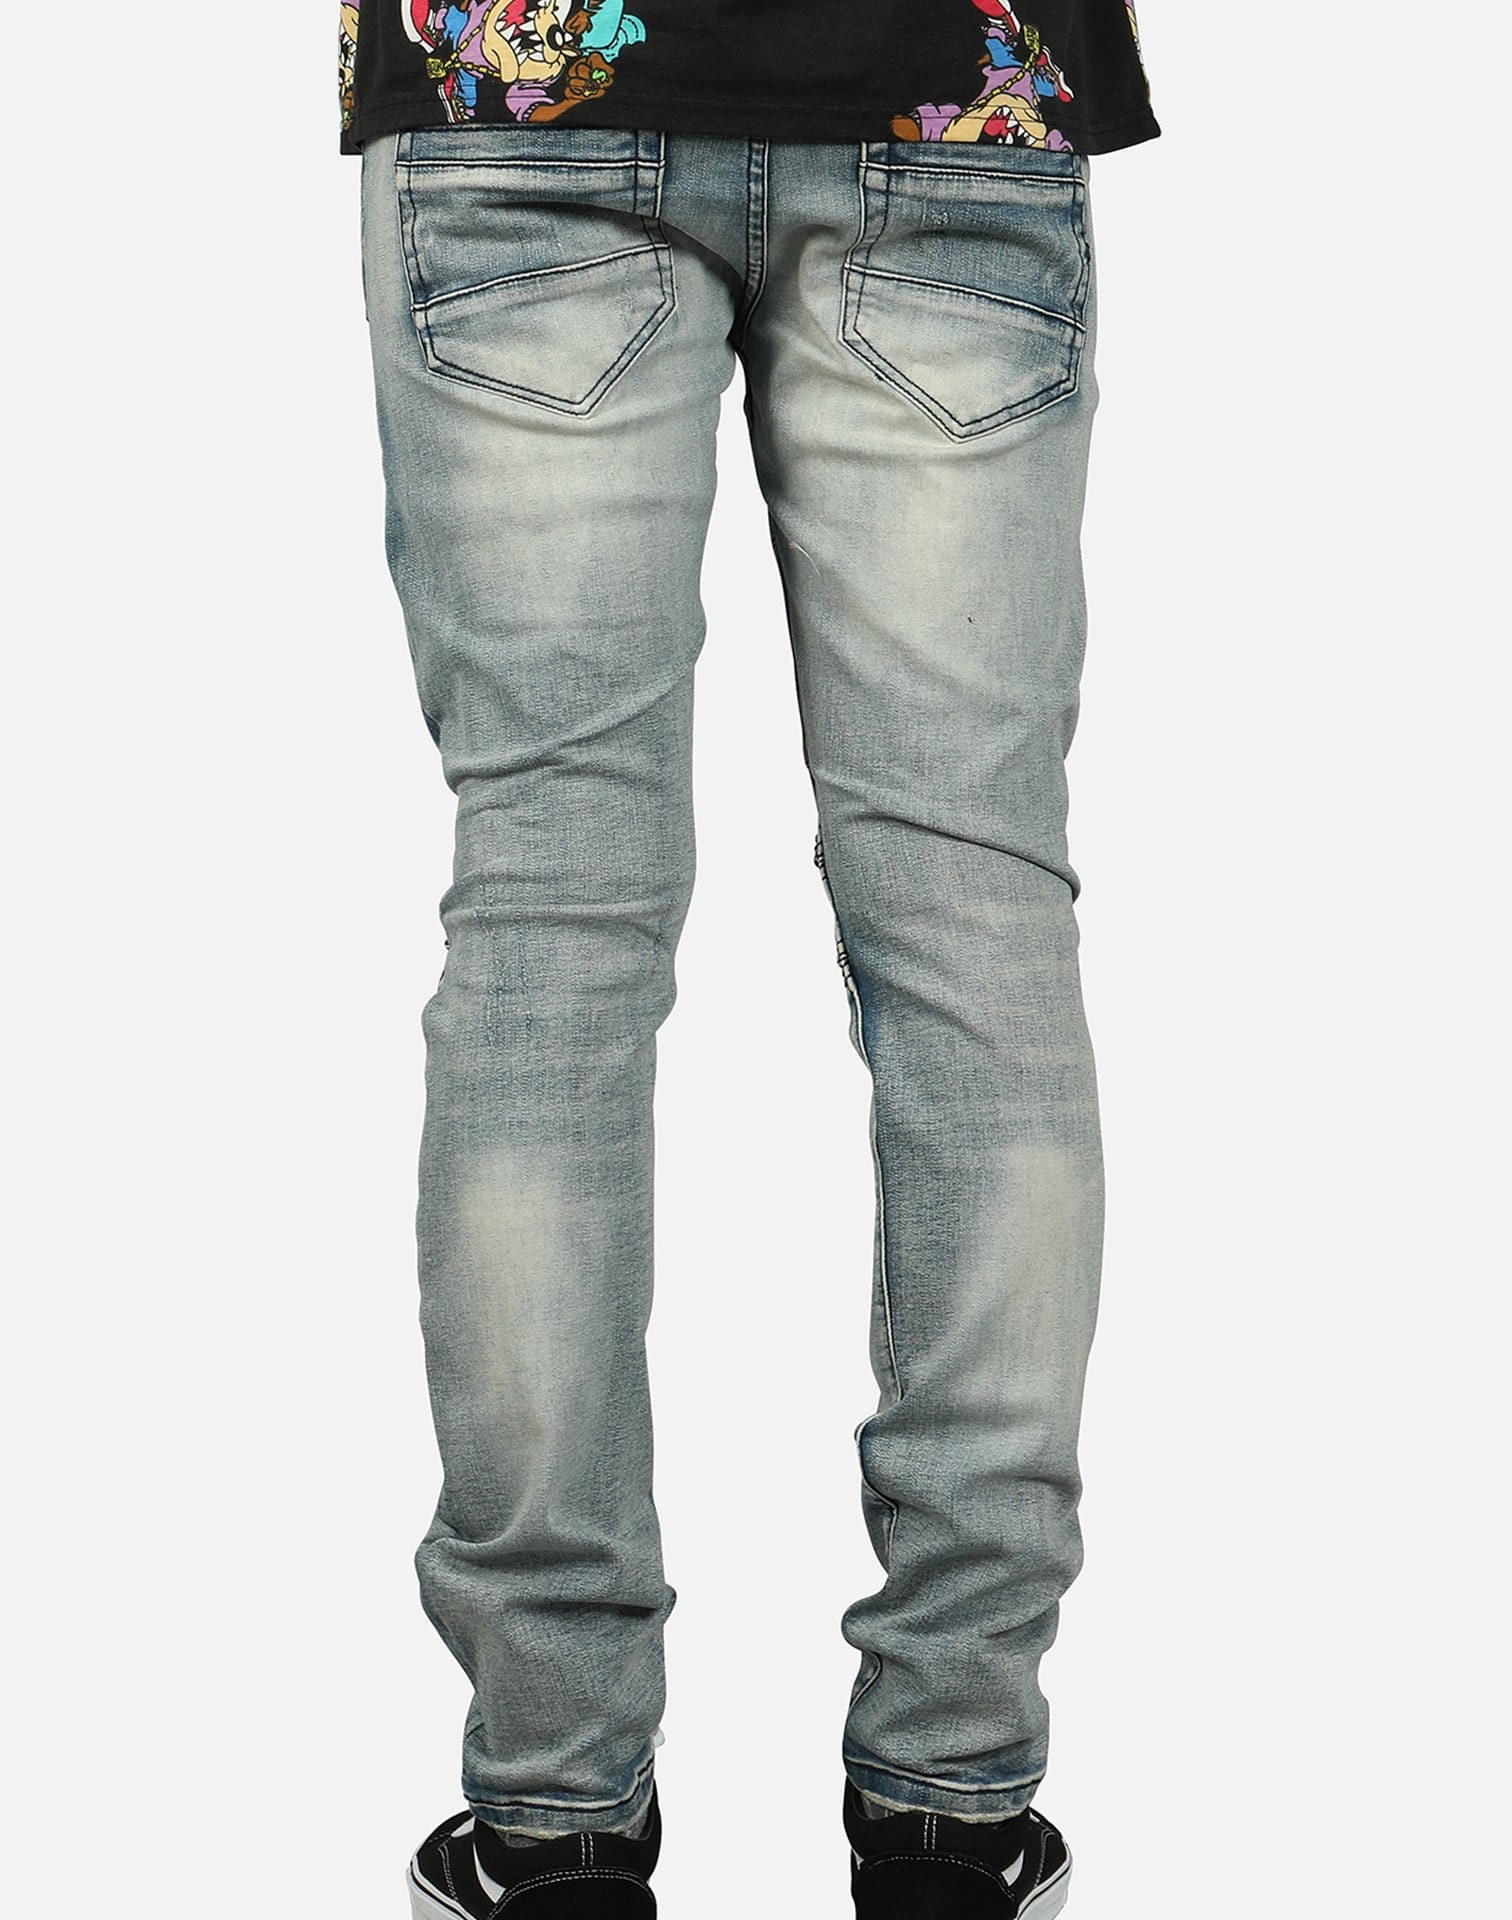 Kilogram Men's Line Tint Jeans